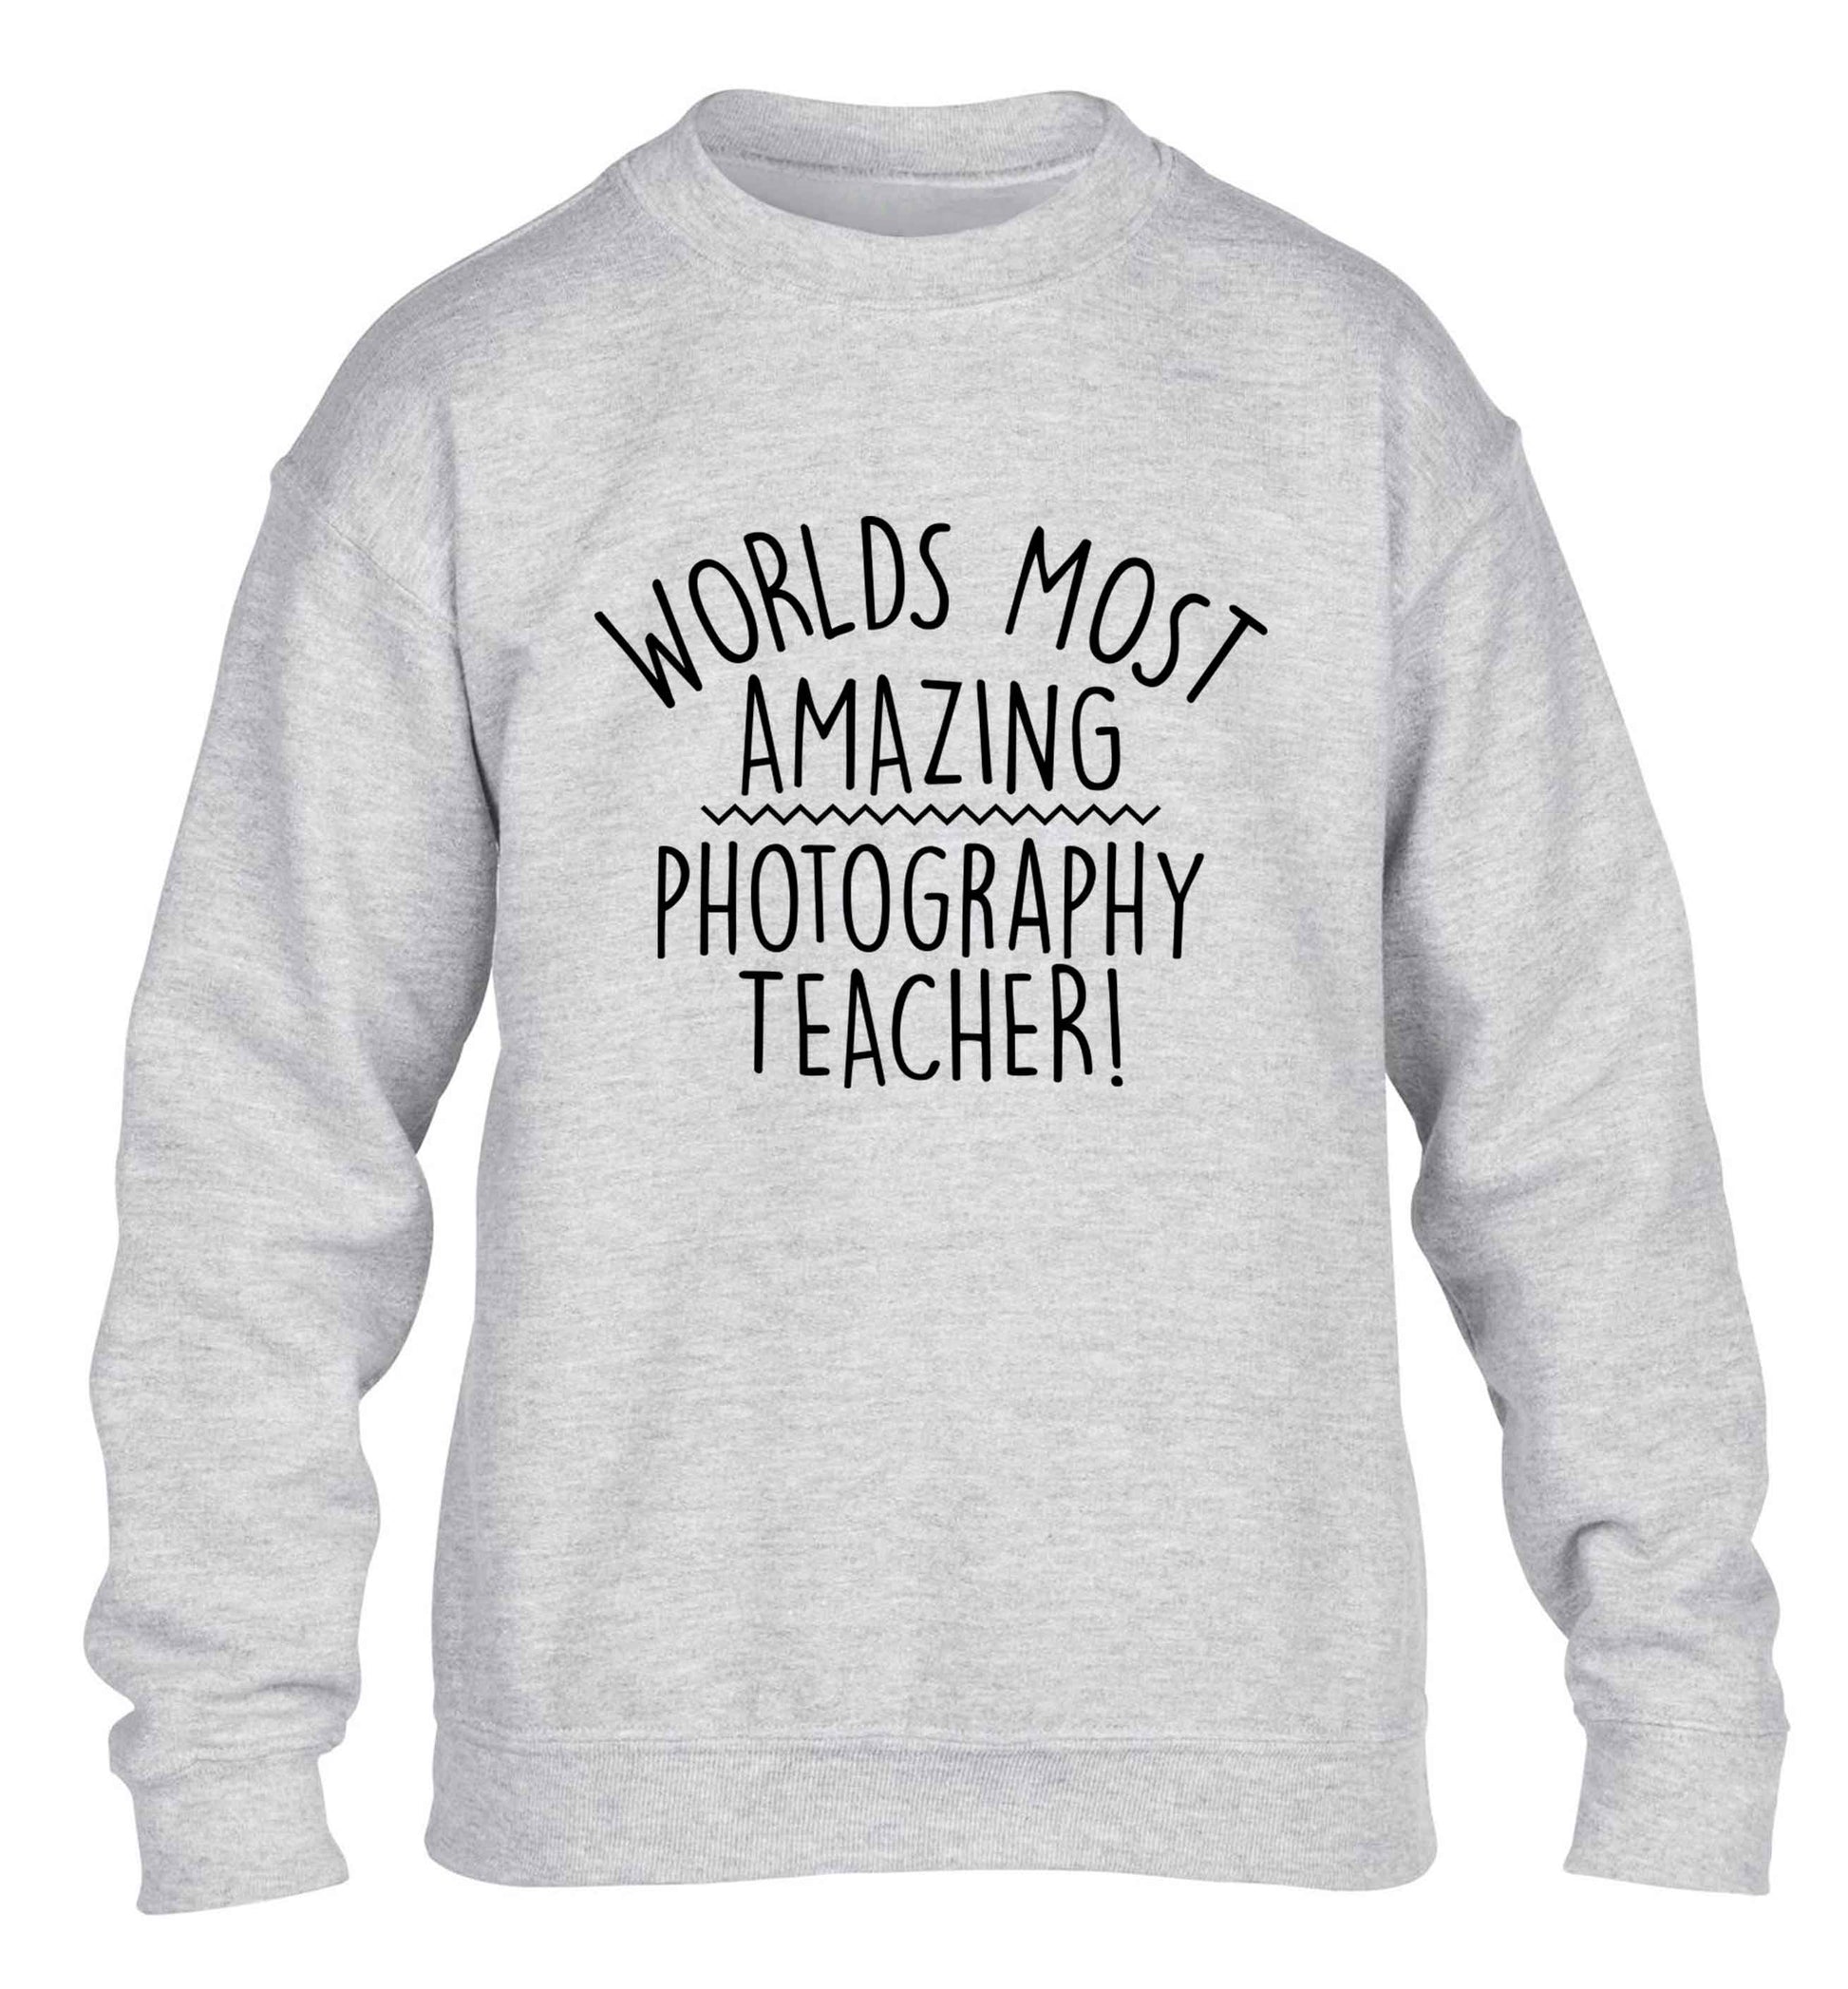 Worlds most amazing photography teacher children's grey sweater 12-13 Years